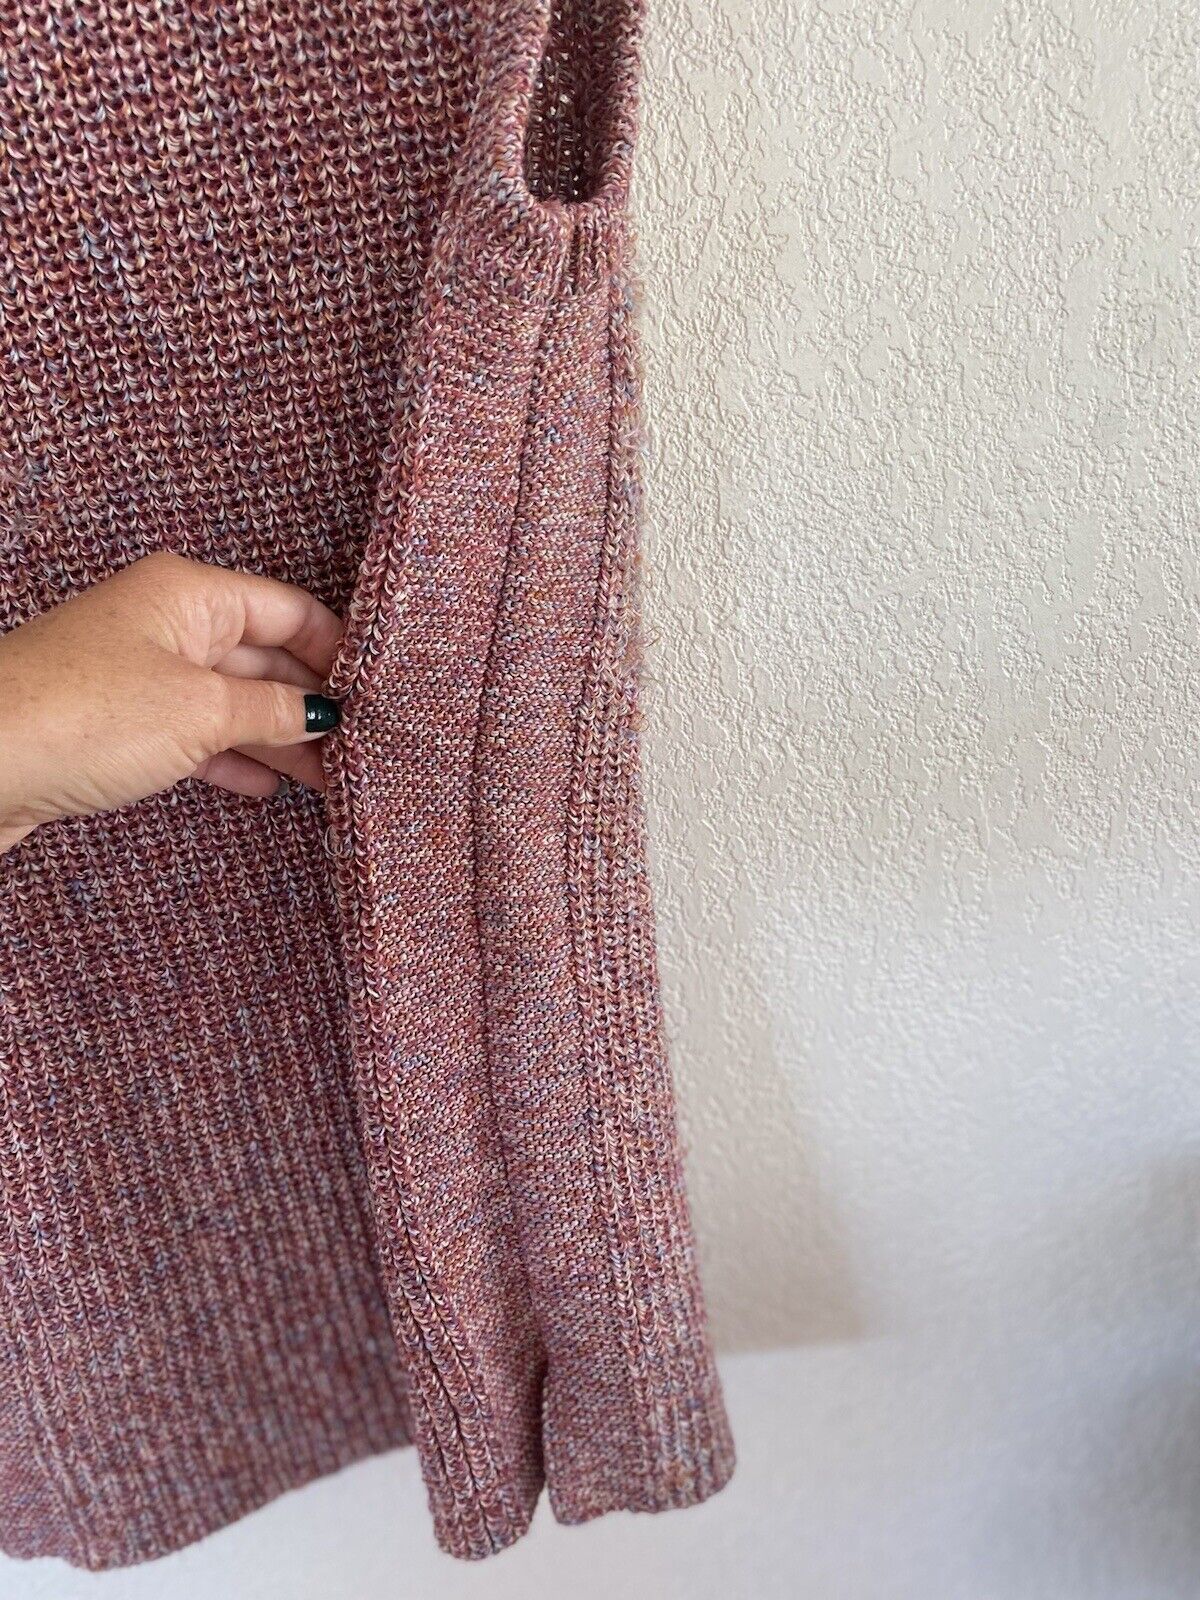 Knit Sweater Vest - Unbranded - Women's Medium